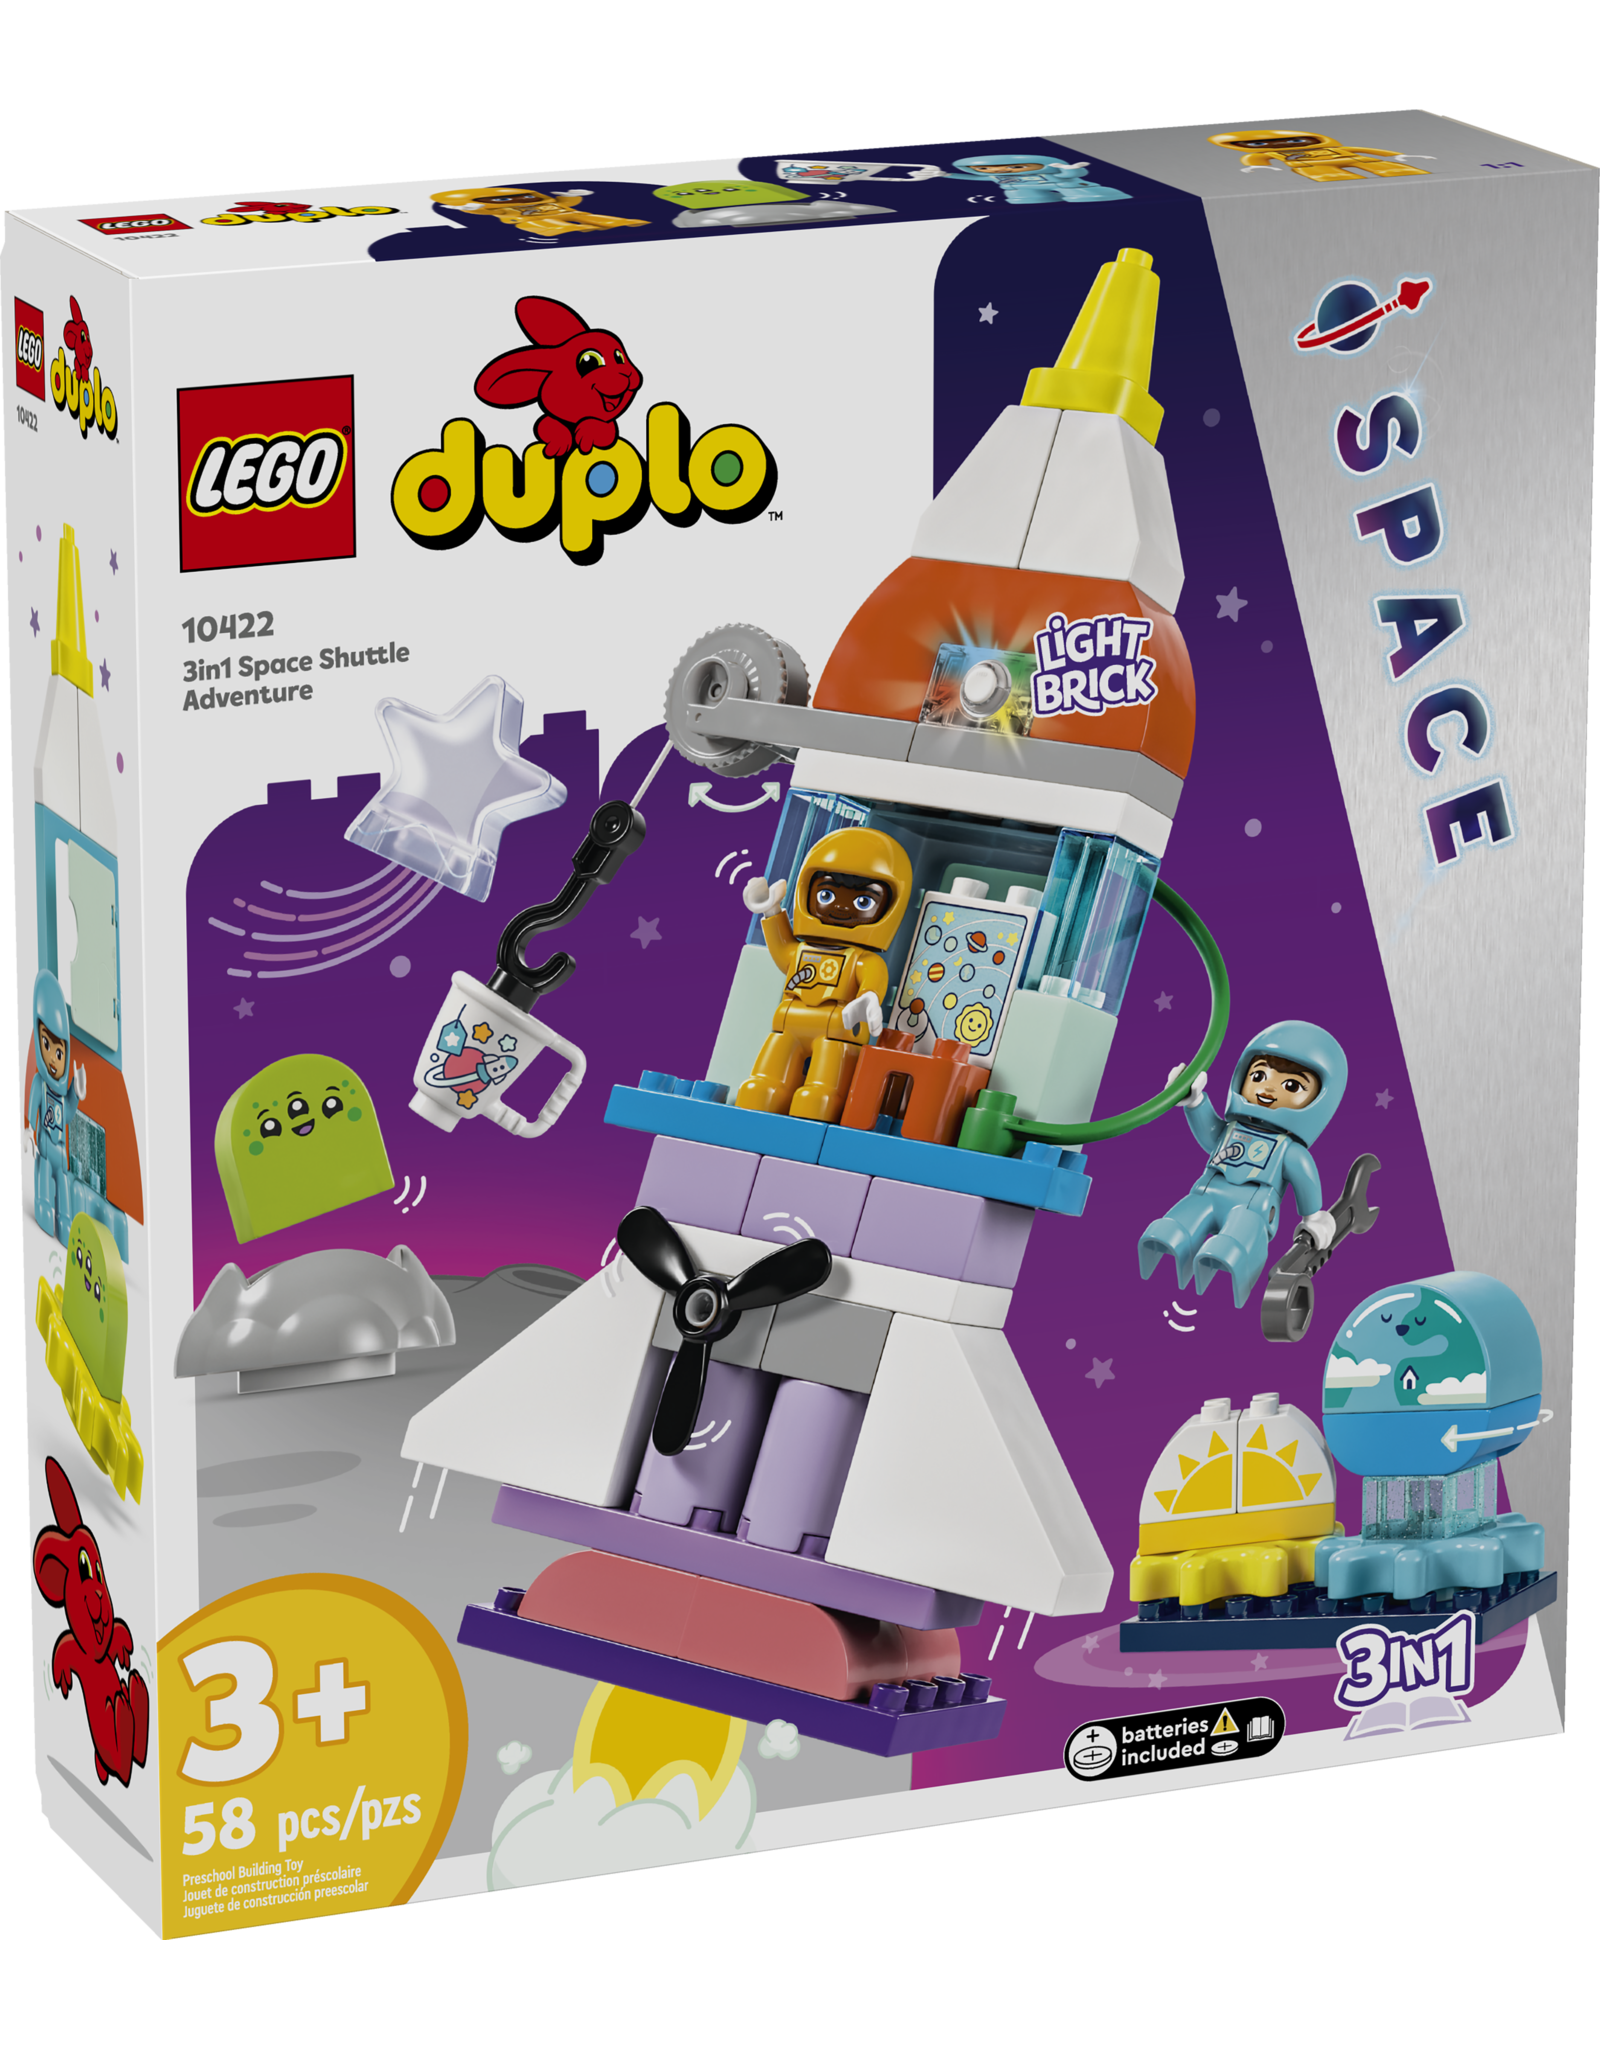 LEGO DUPLO 10422 3in1 Space Shuttle Adventure